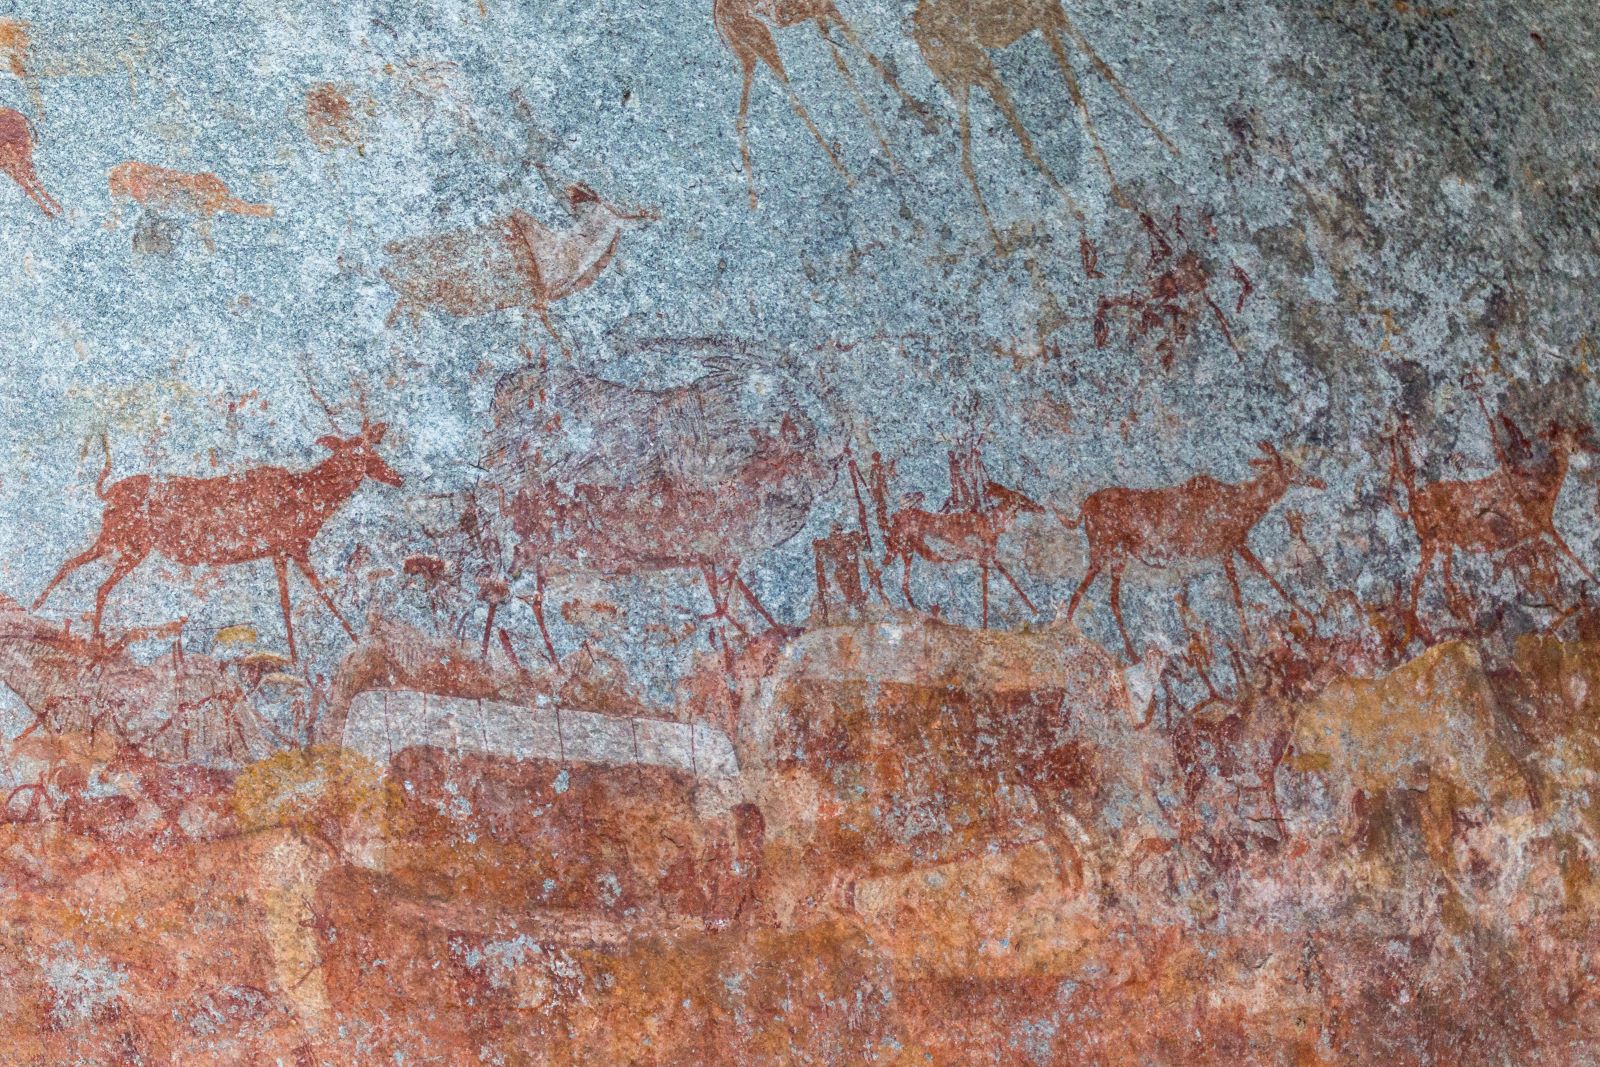 Bushmen rock art on the walls of a cave at Matobo Hills in ZImbabwe